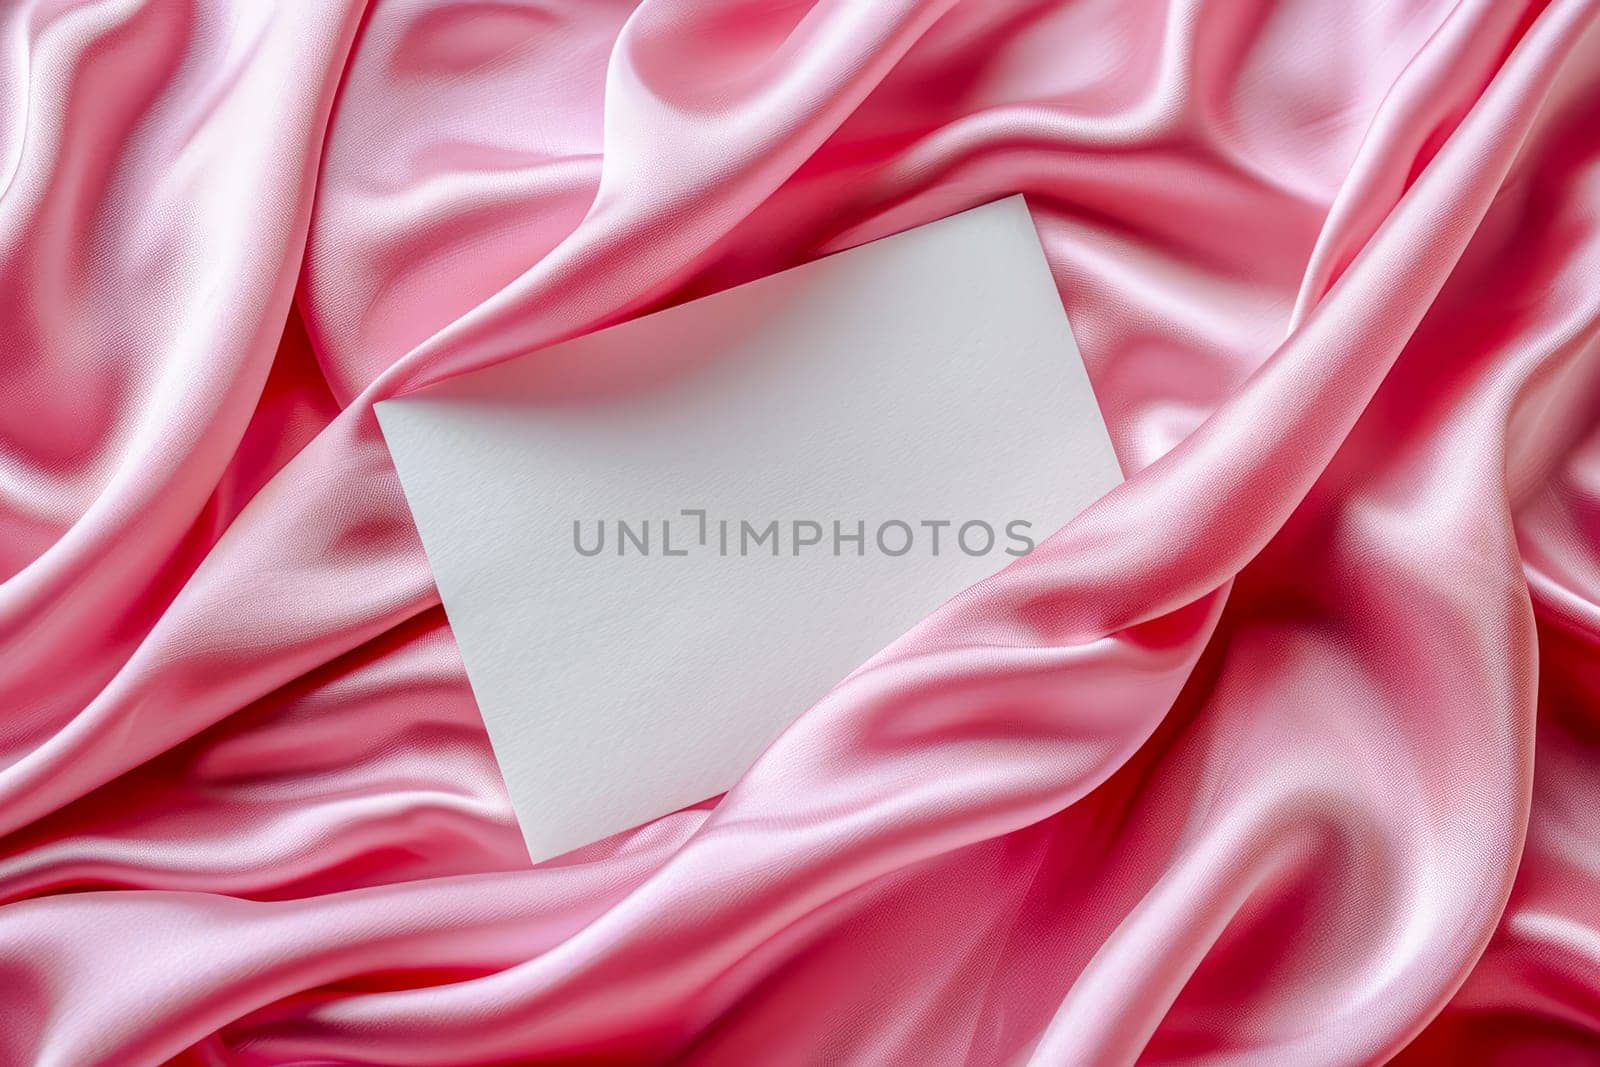 Minimalist aesthetic mockup from white blank A5 letterhead on pink silk fabric. by OlgaGubskaya